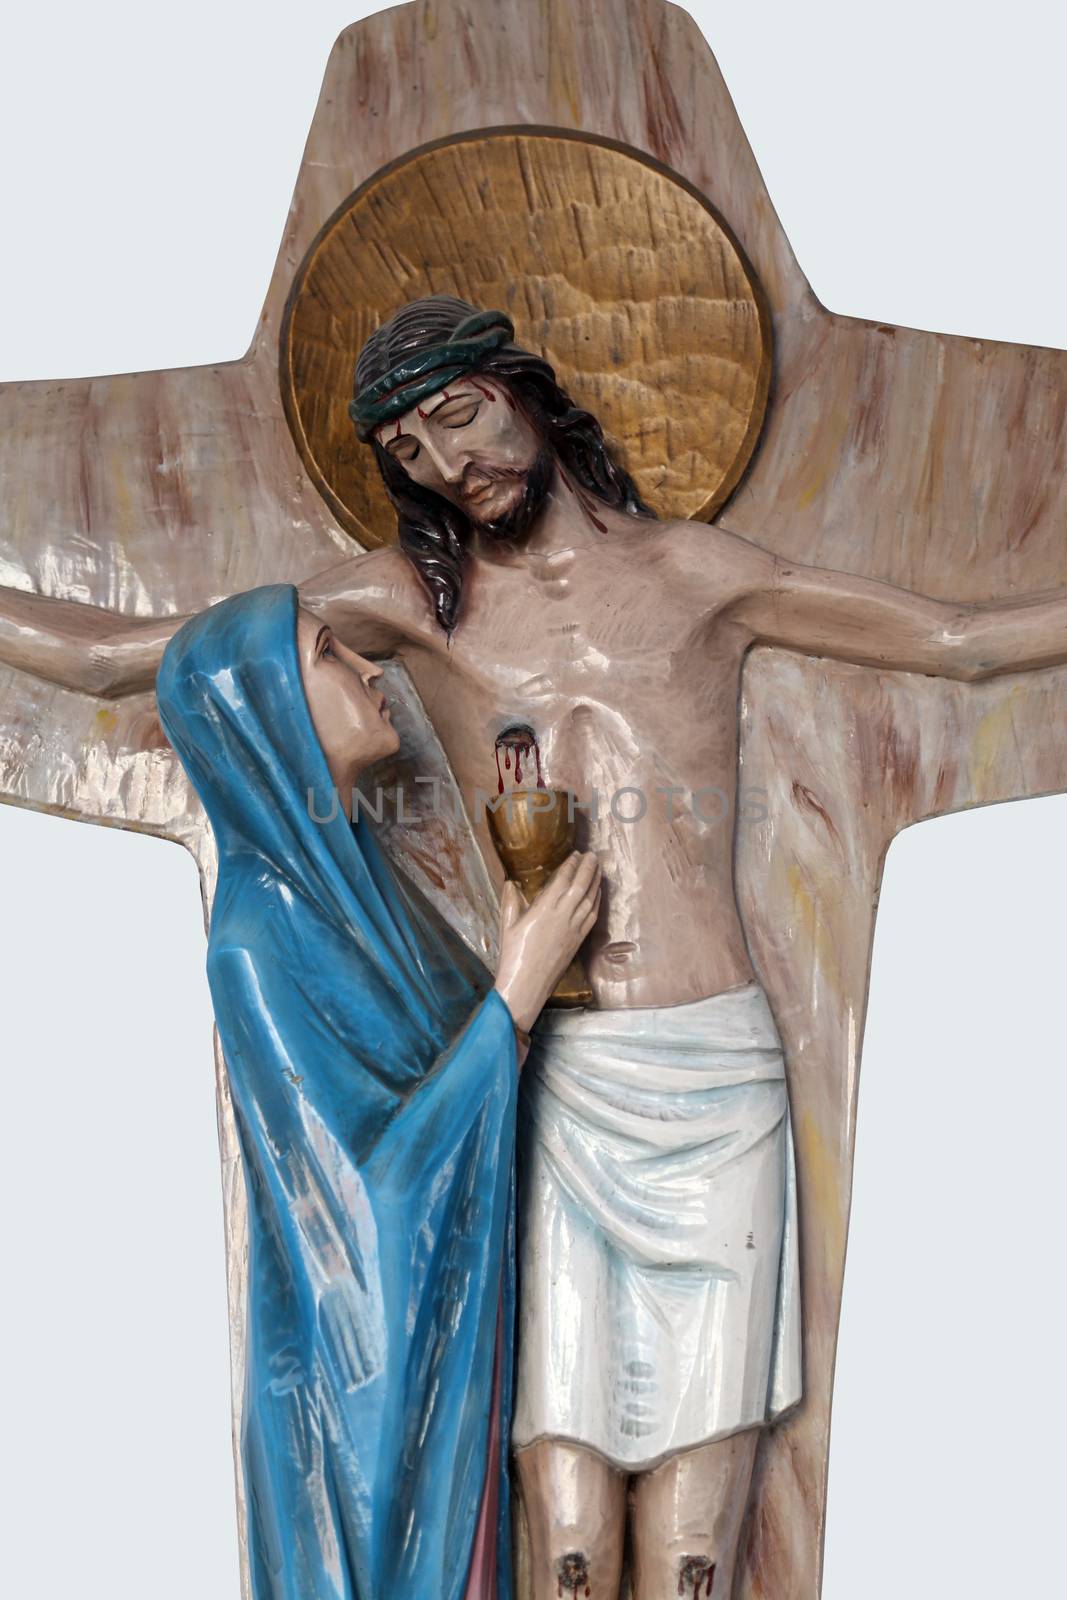 Virgin Mary under the cross by atlas